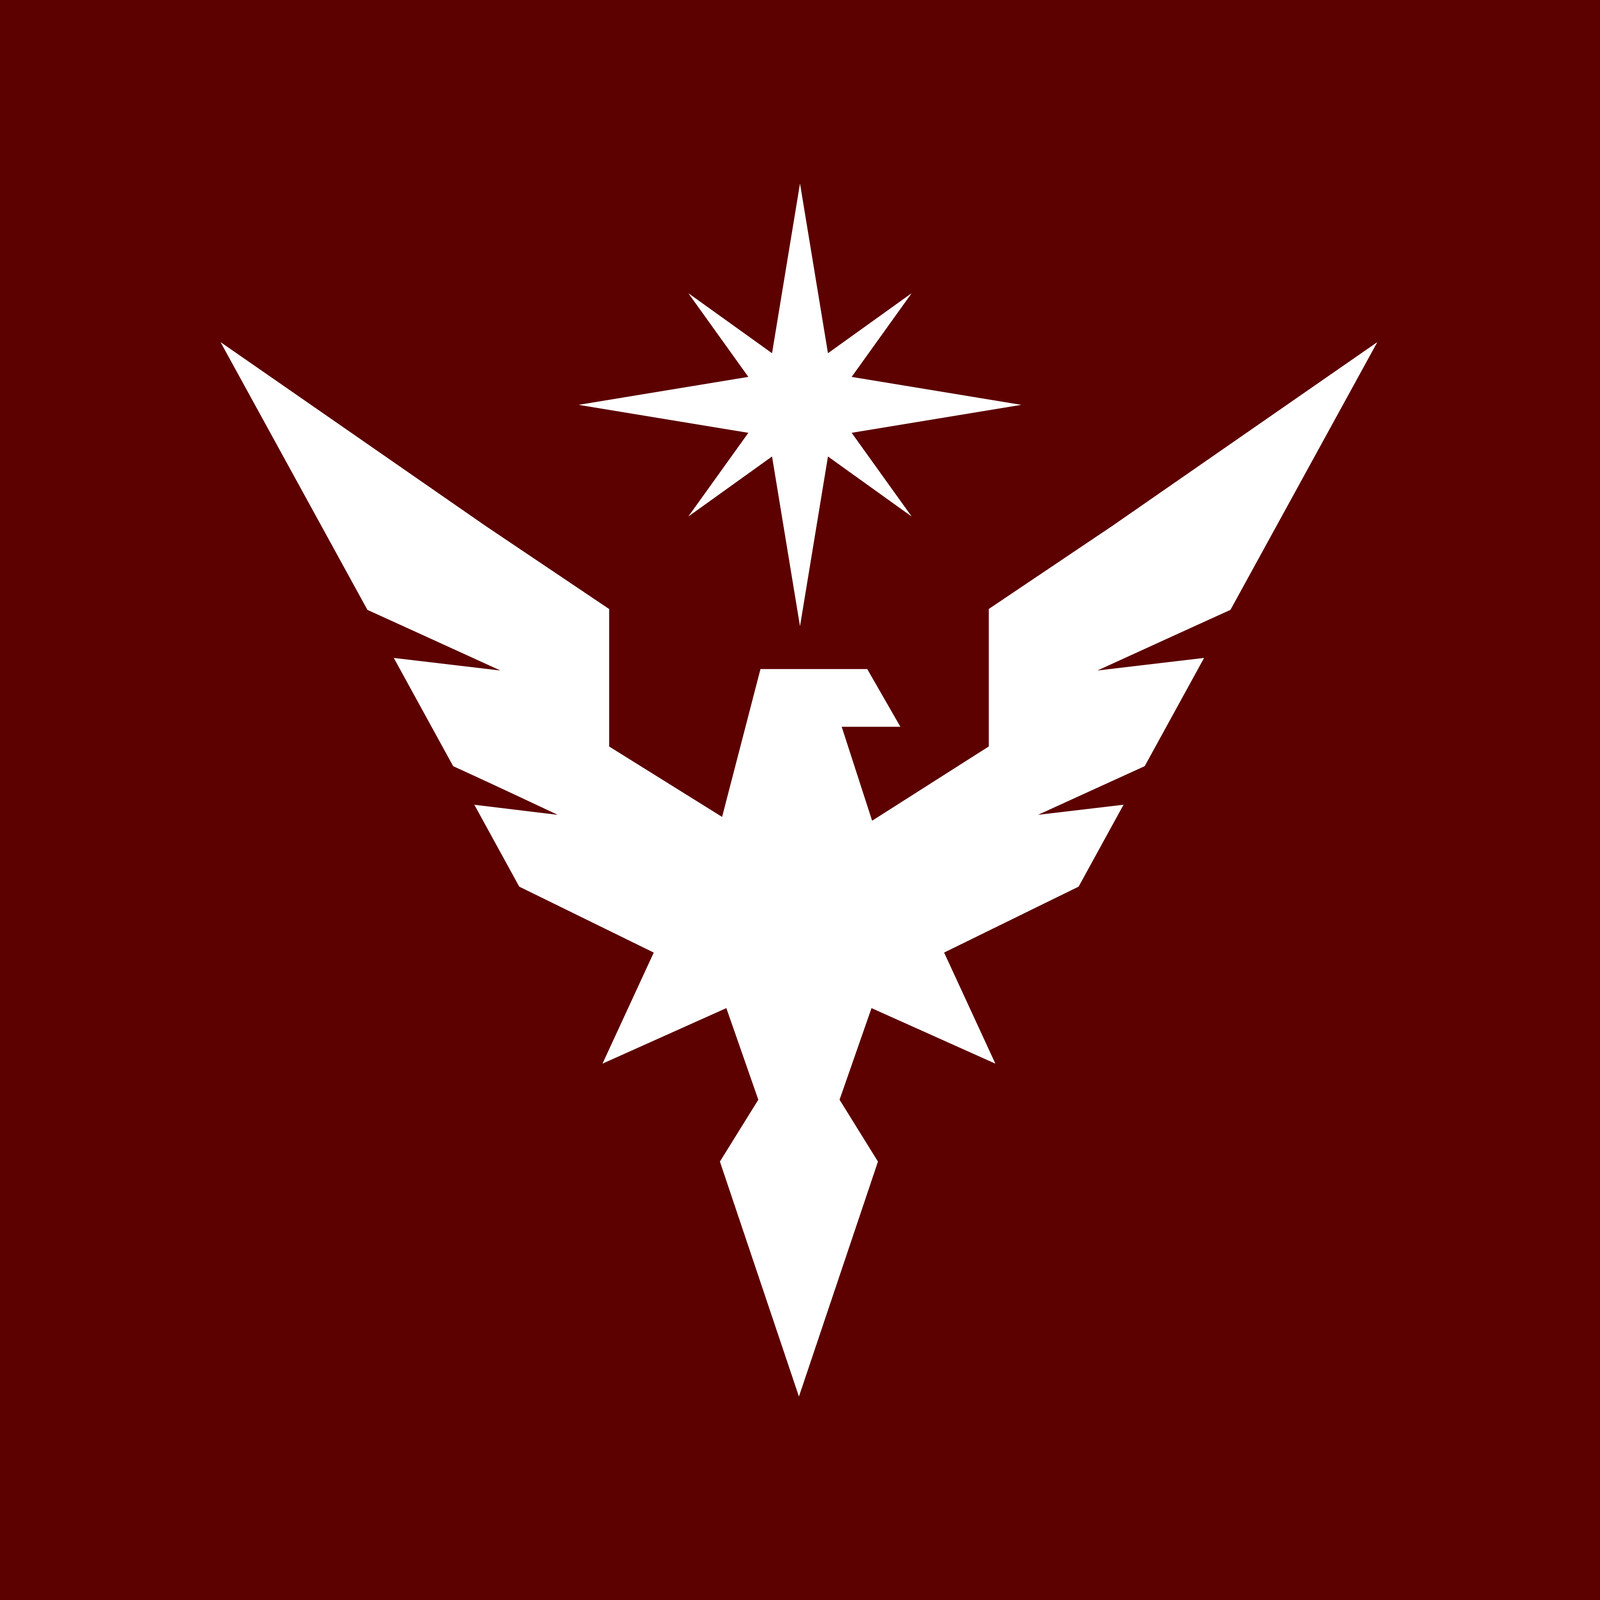 (Logo design) Altair - The Empire 